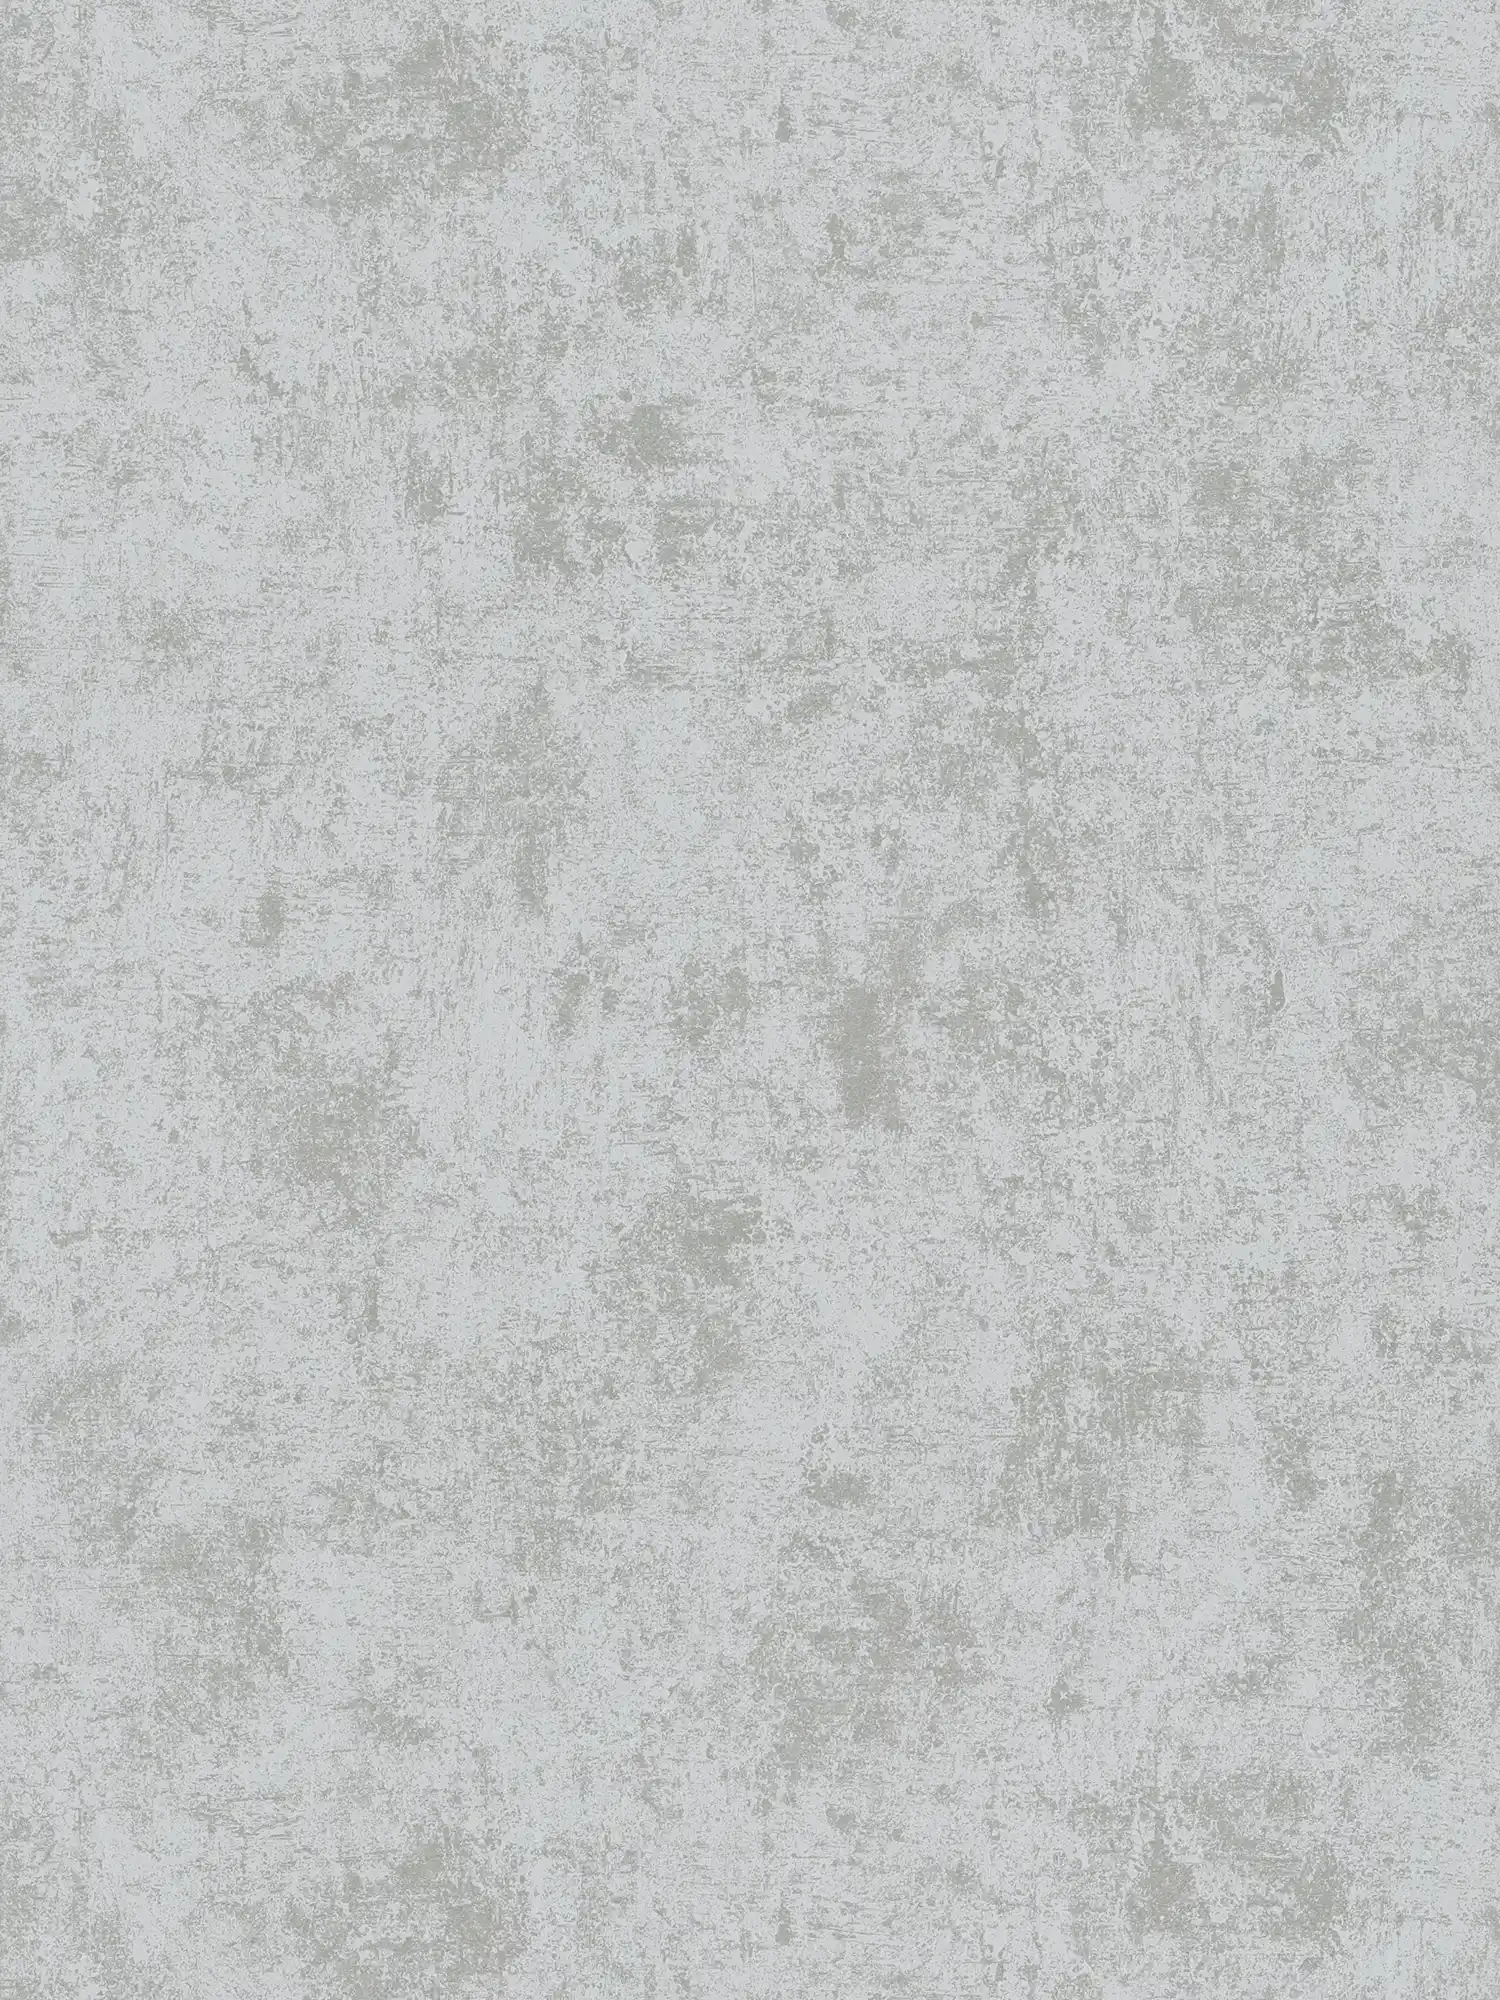 Metal-effect wallpaper smooth glossy - silver, grey, metallic
